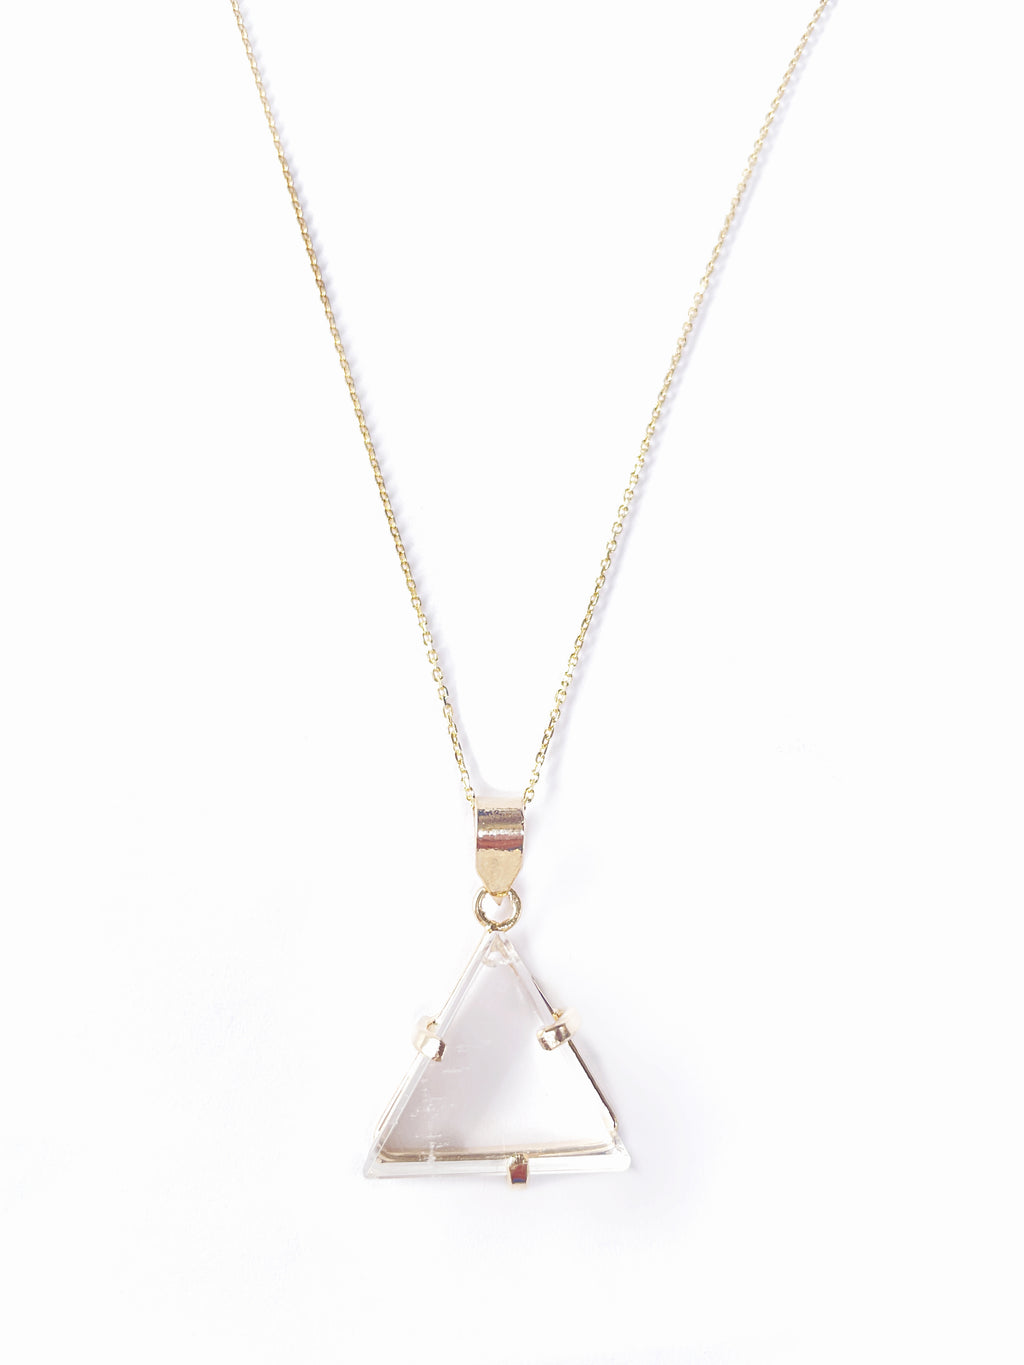 Bergkristall Halskette als Dreieck vergoldet Crystal and Sage Jewelry